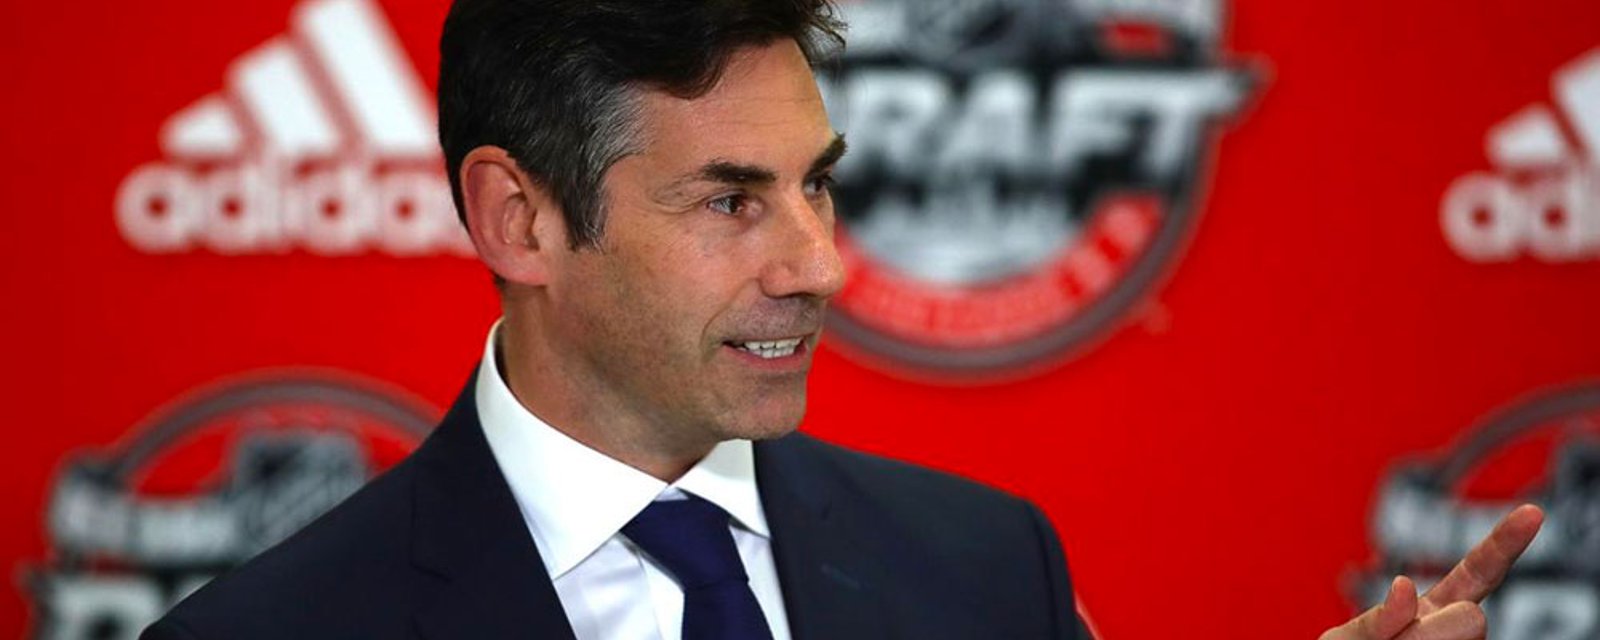 Shocking development concerning former NHLer Mathieu Schneider